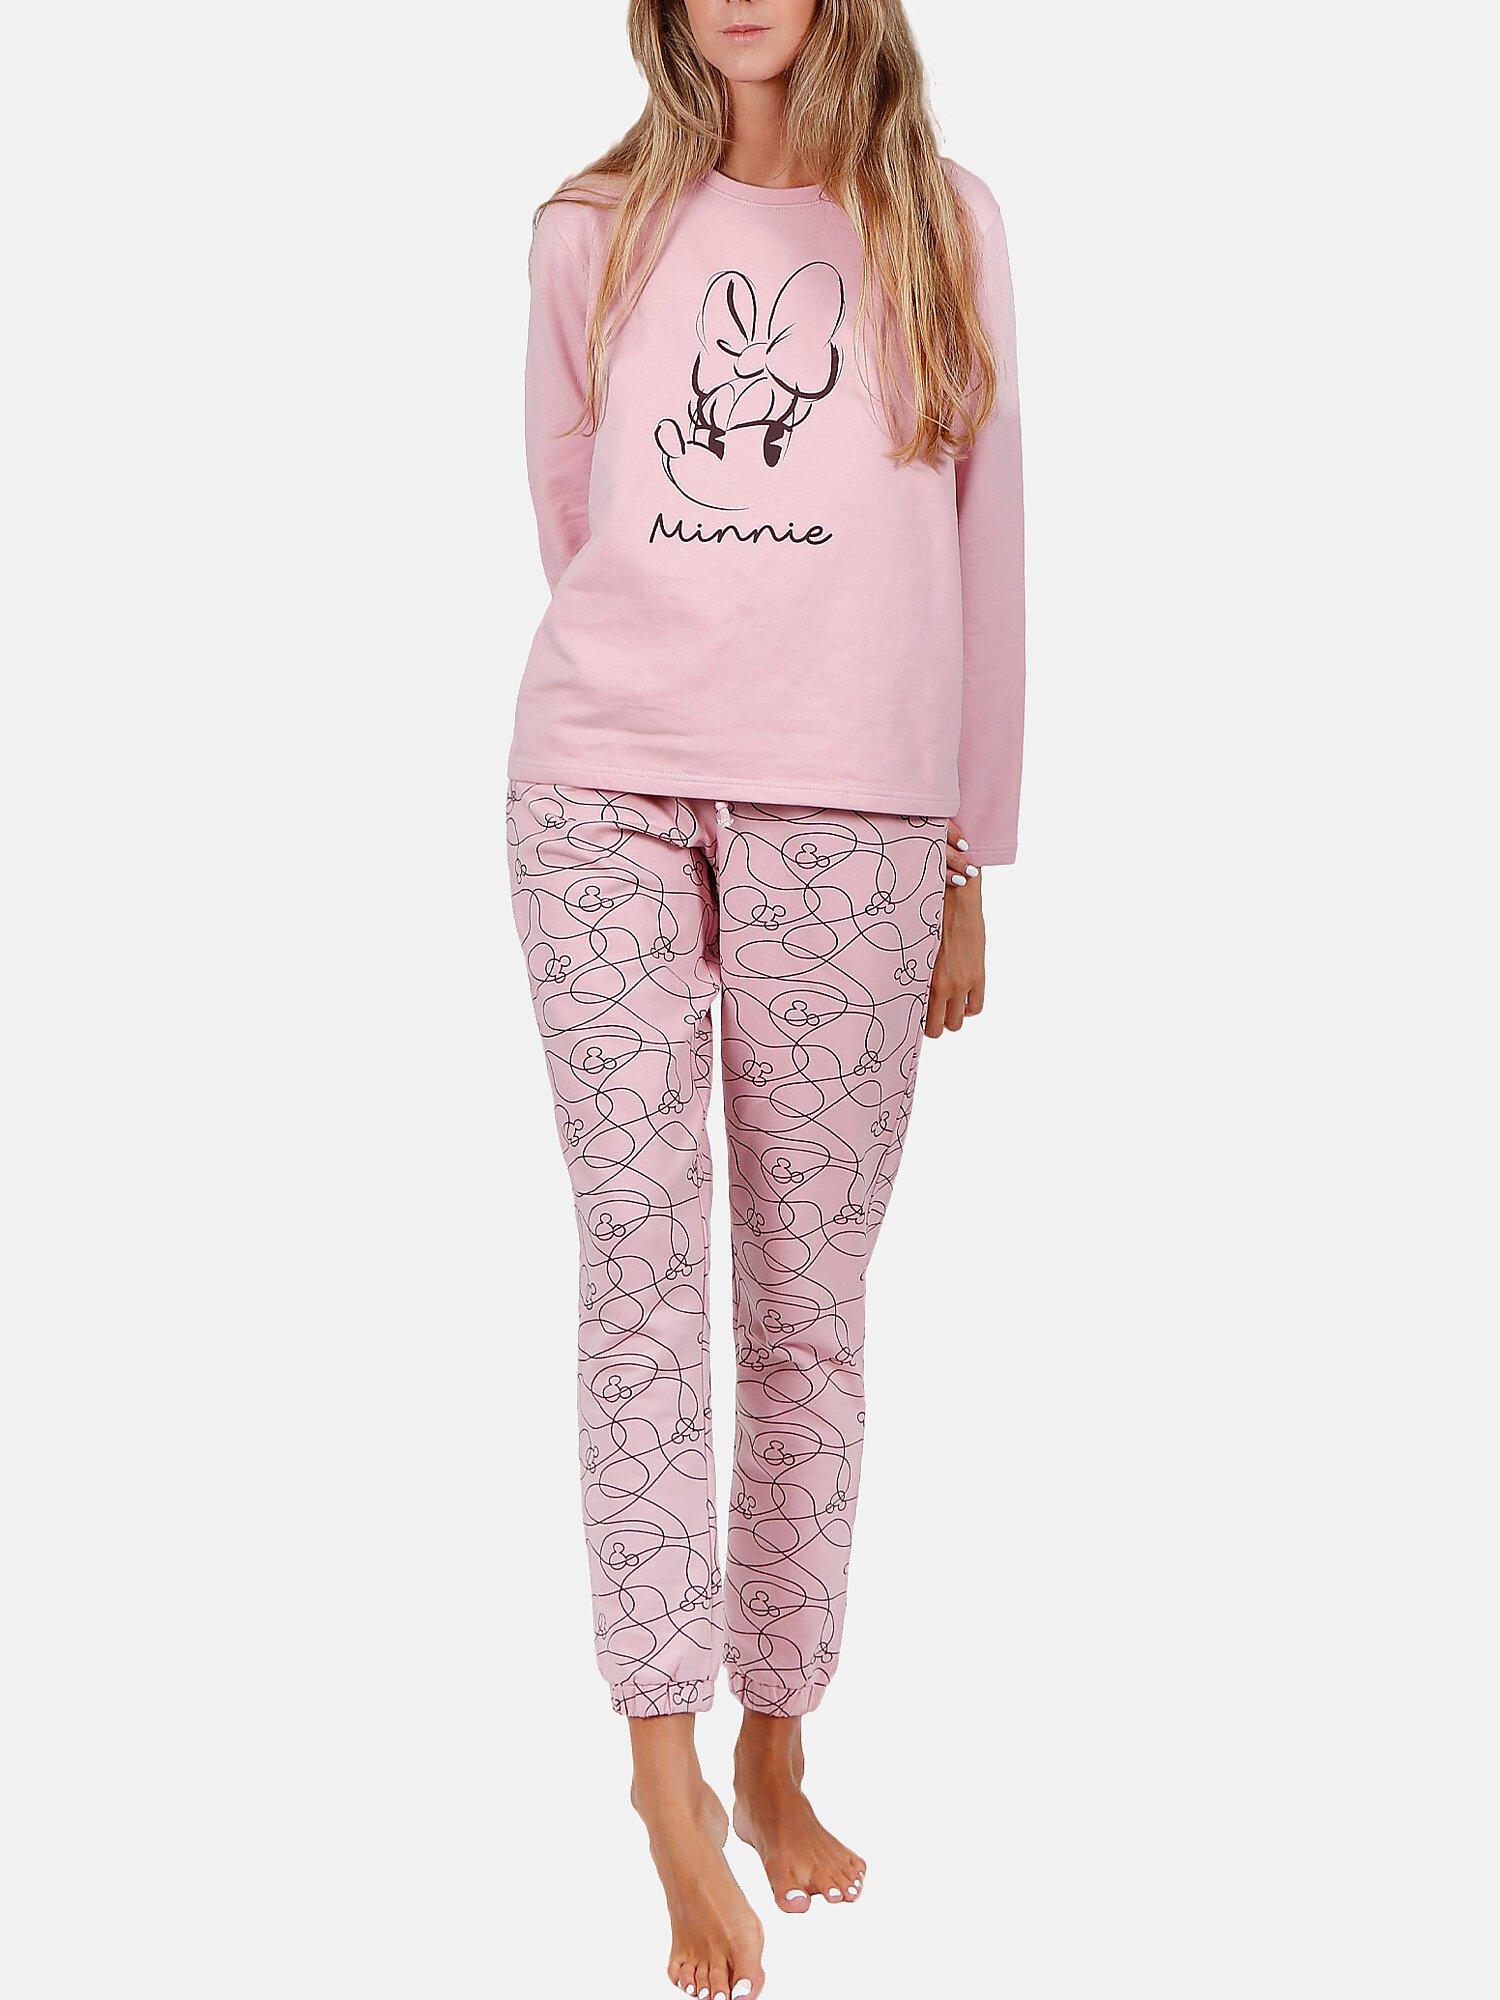 Pyjama Indoor-outfit Lange Hose Oberteil Minnie Soft Disney Damen Altrosa L von Admas